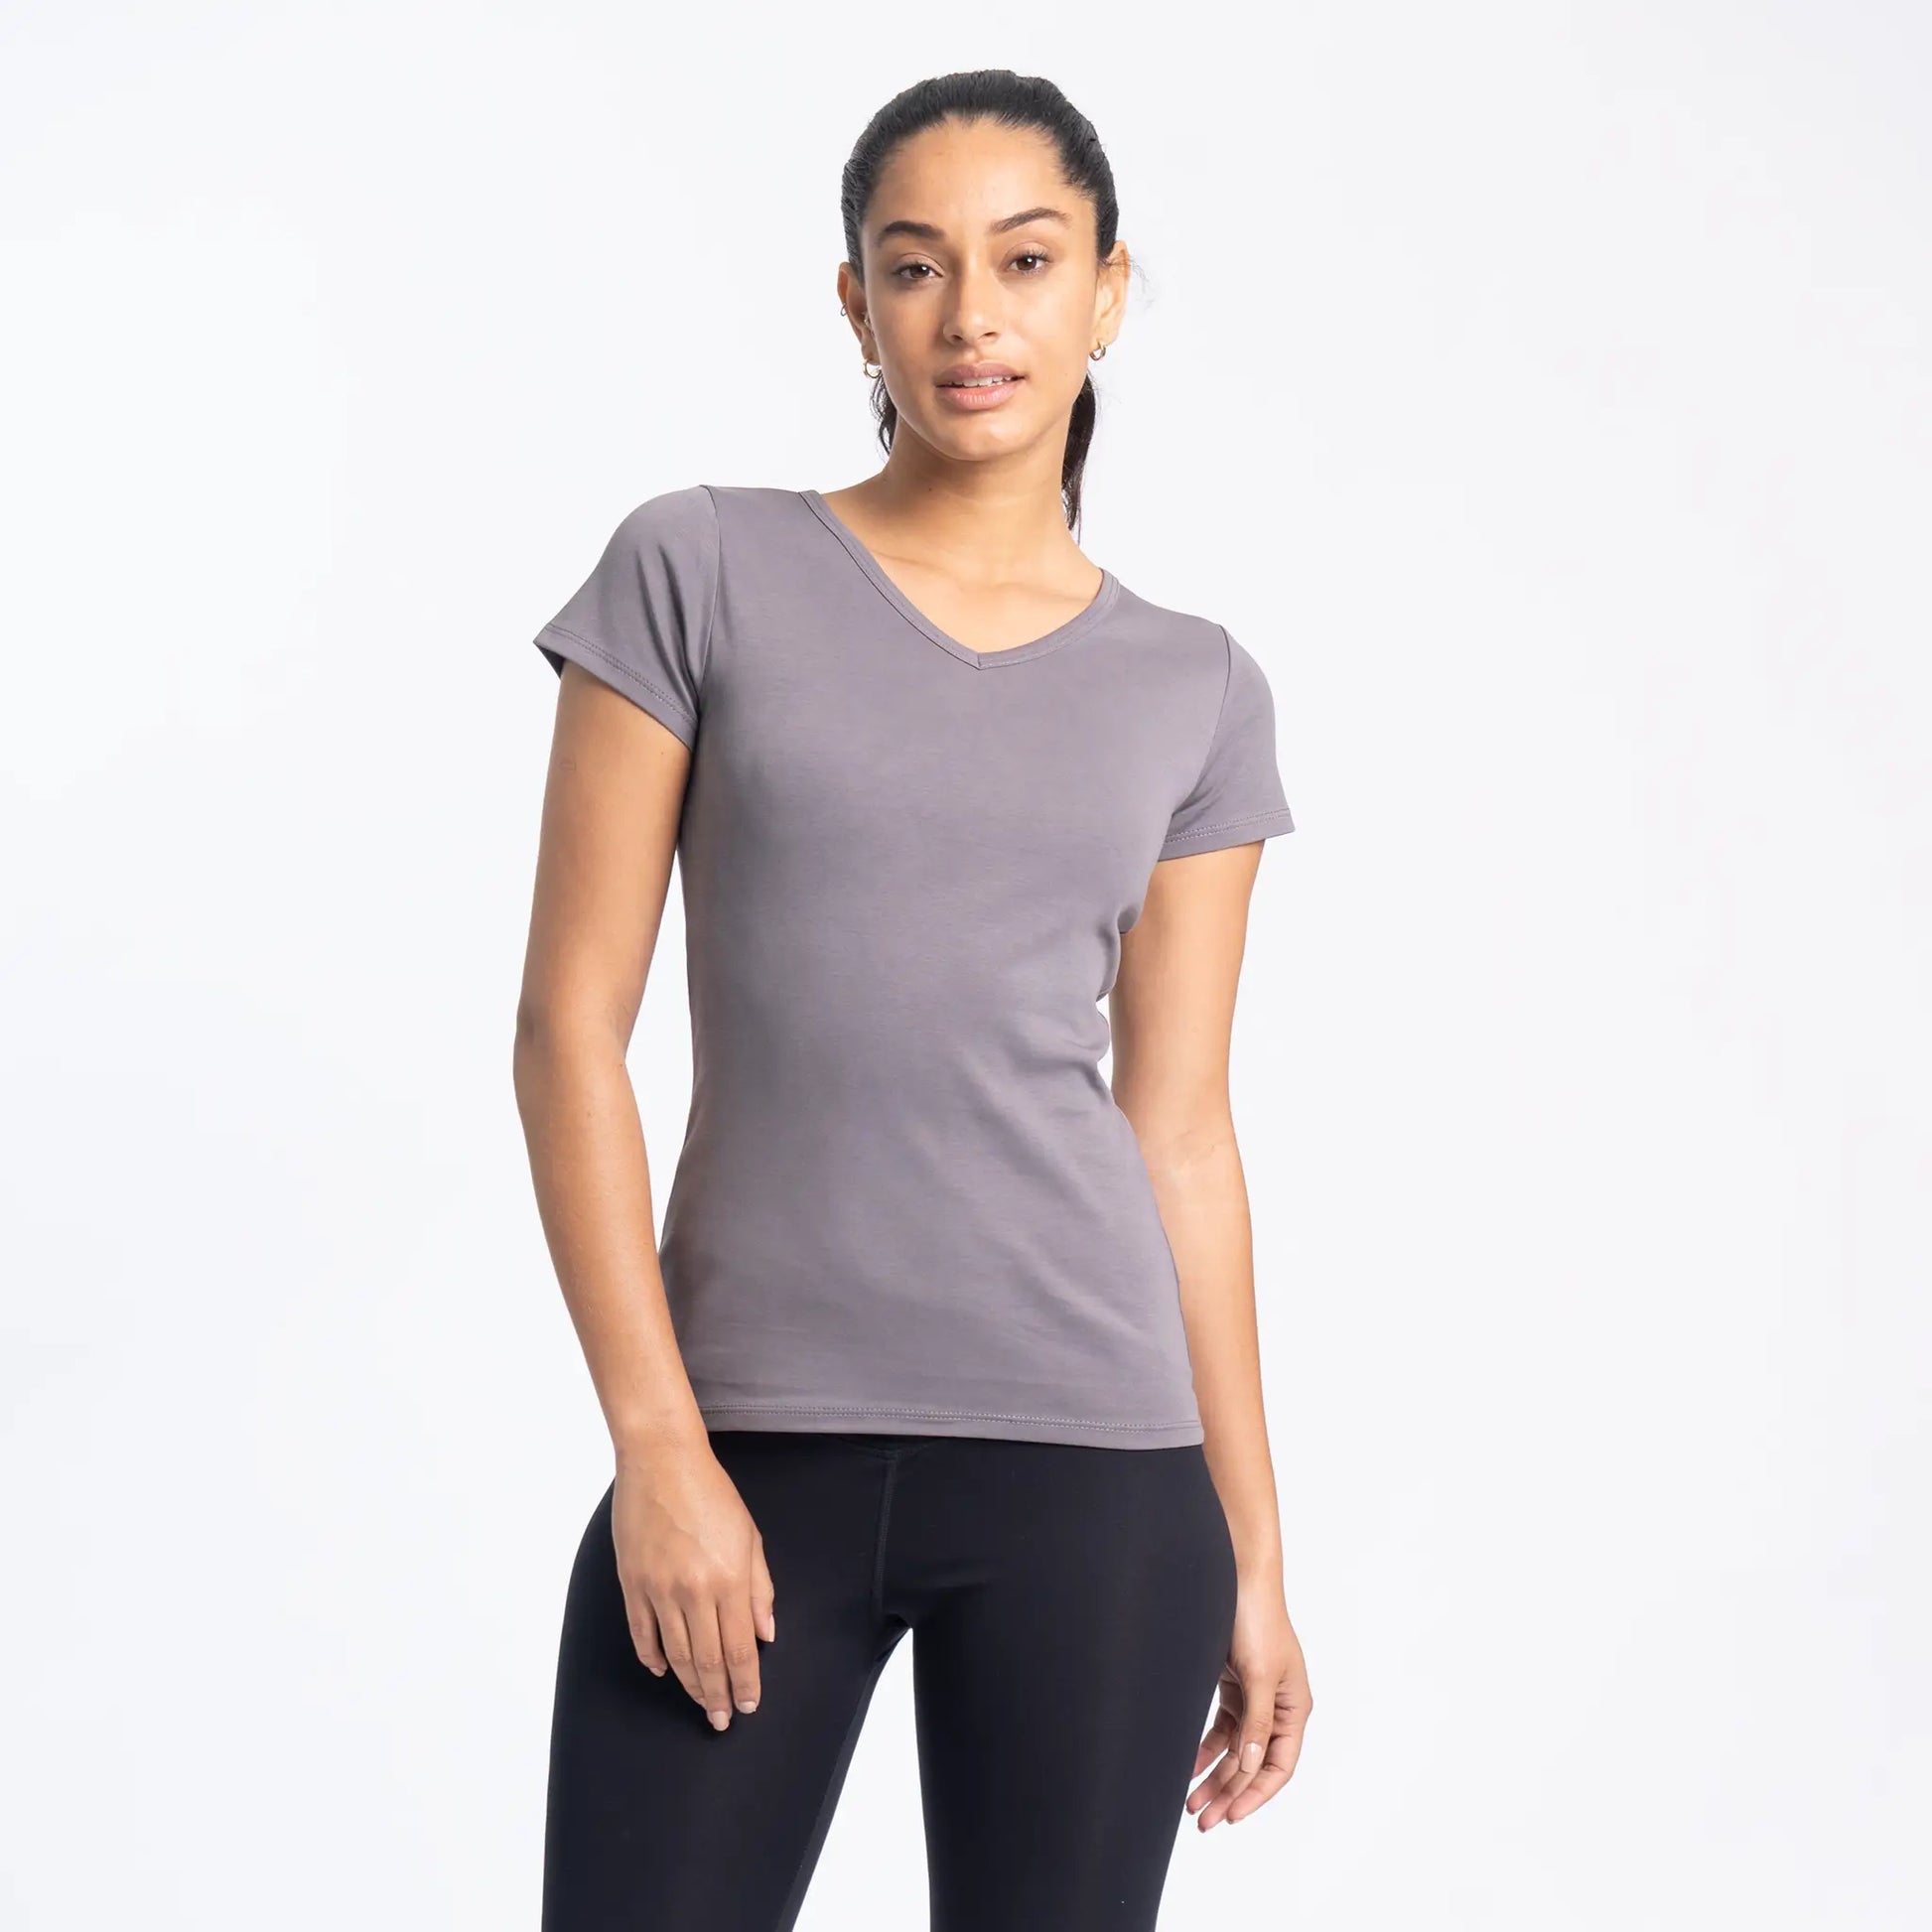 womens indoor tshirt vneck color natural gray